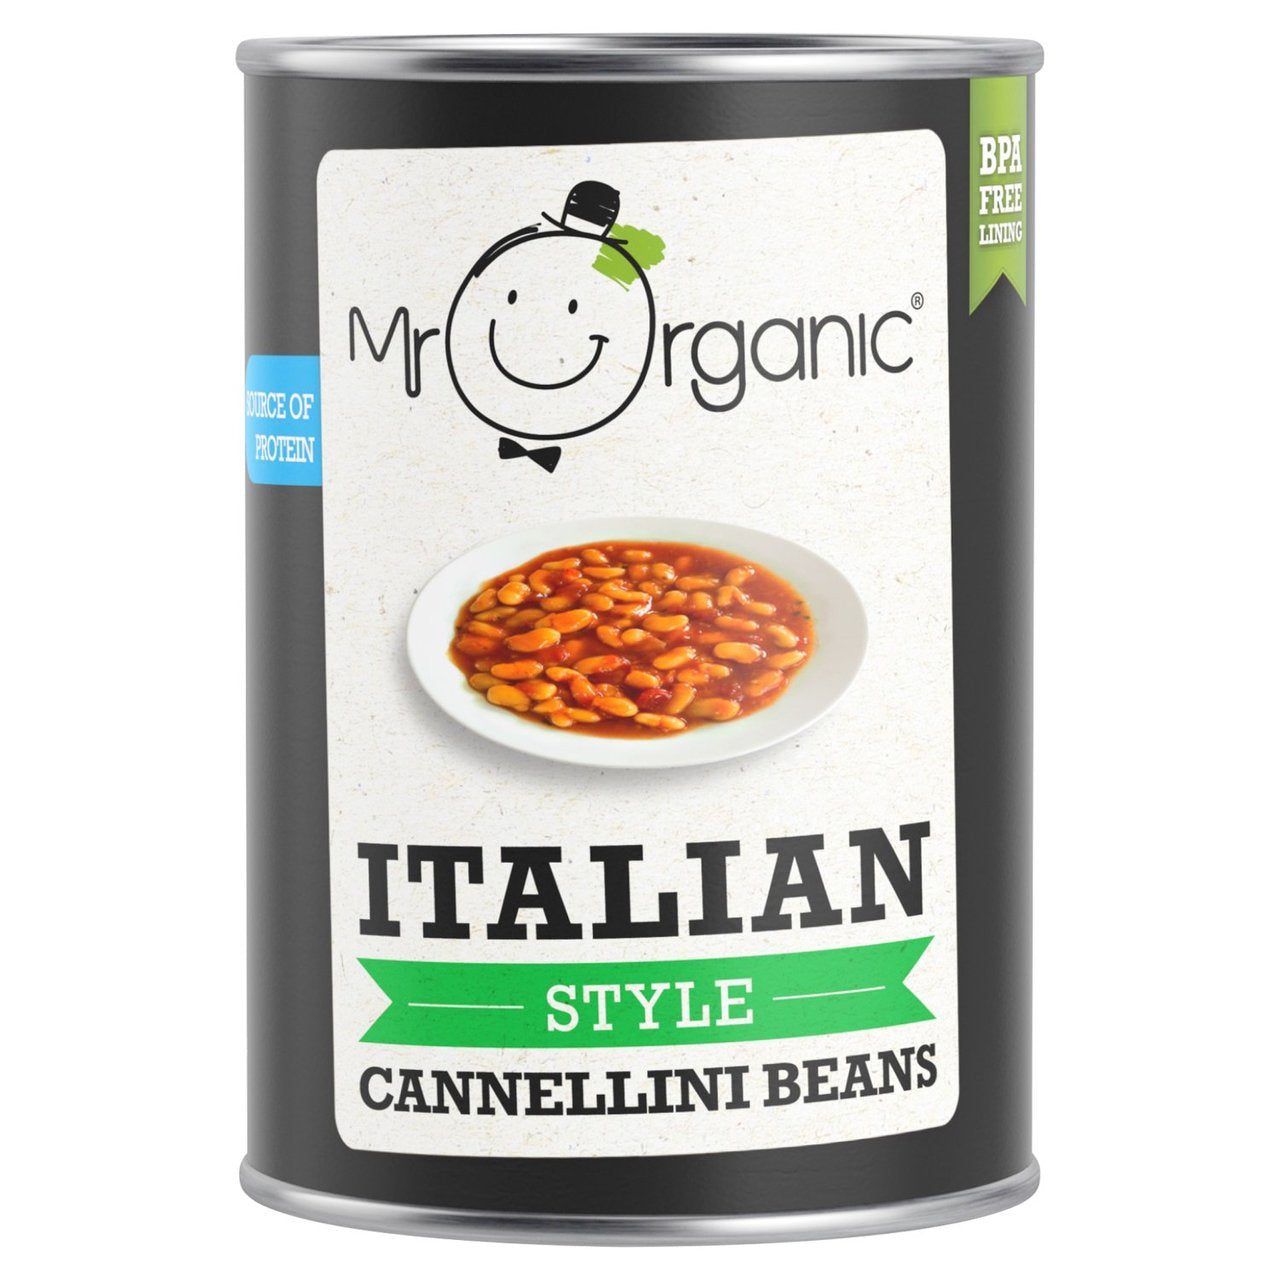 Italian style cannellini beans - Mr Organic